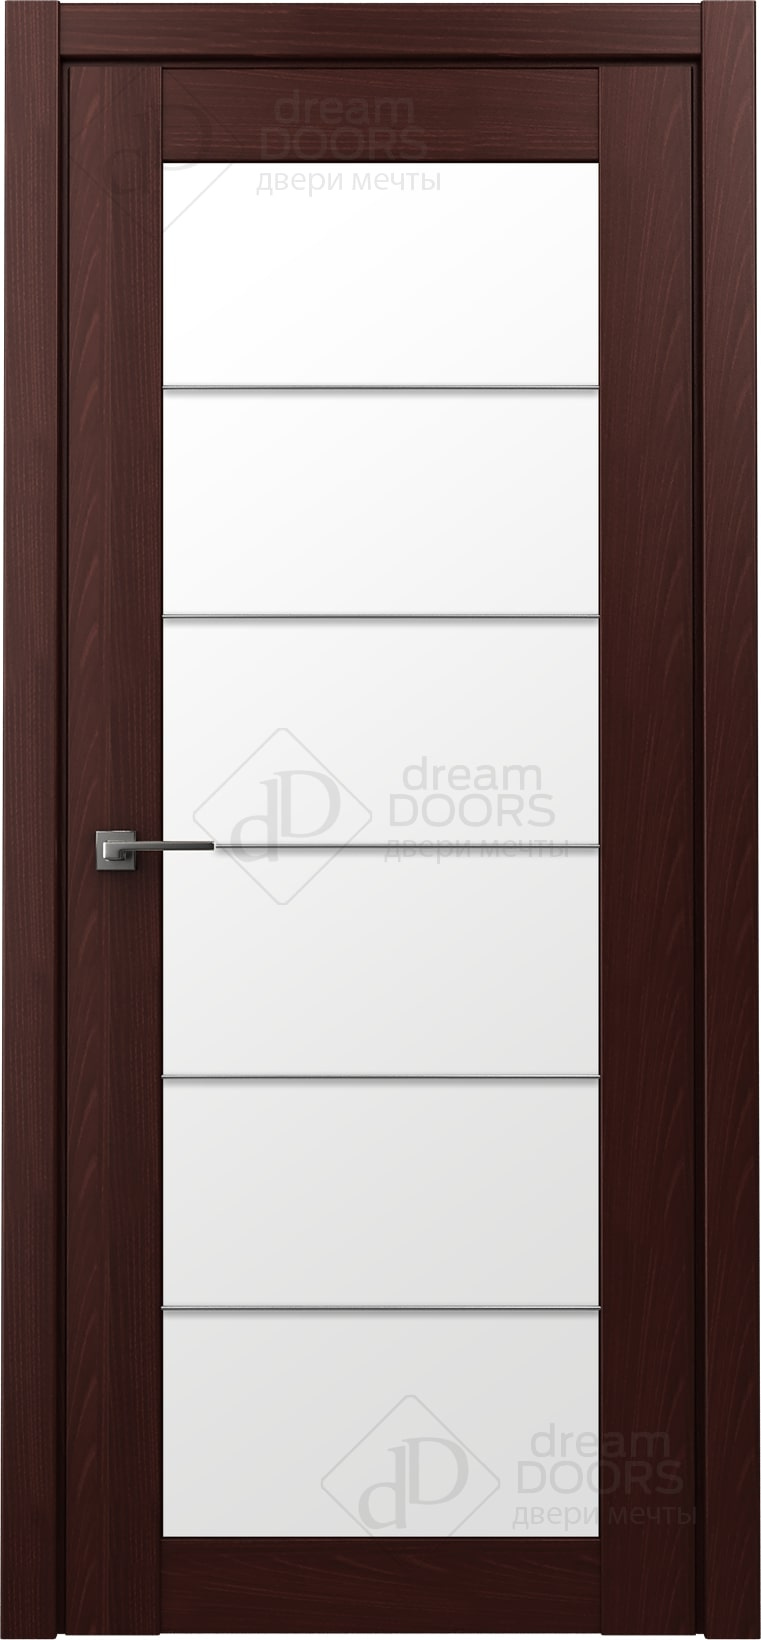 Dream Doors Межкомнатная дверь Престиж с молдингом ПО, арт. 16437 - фото №1